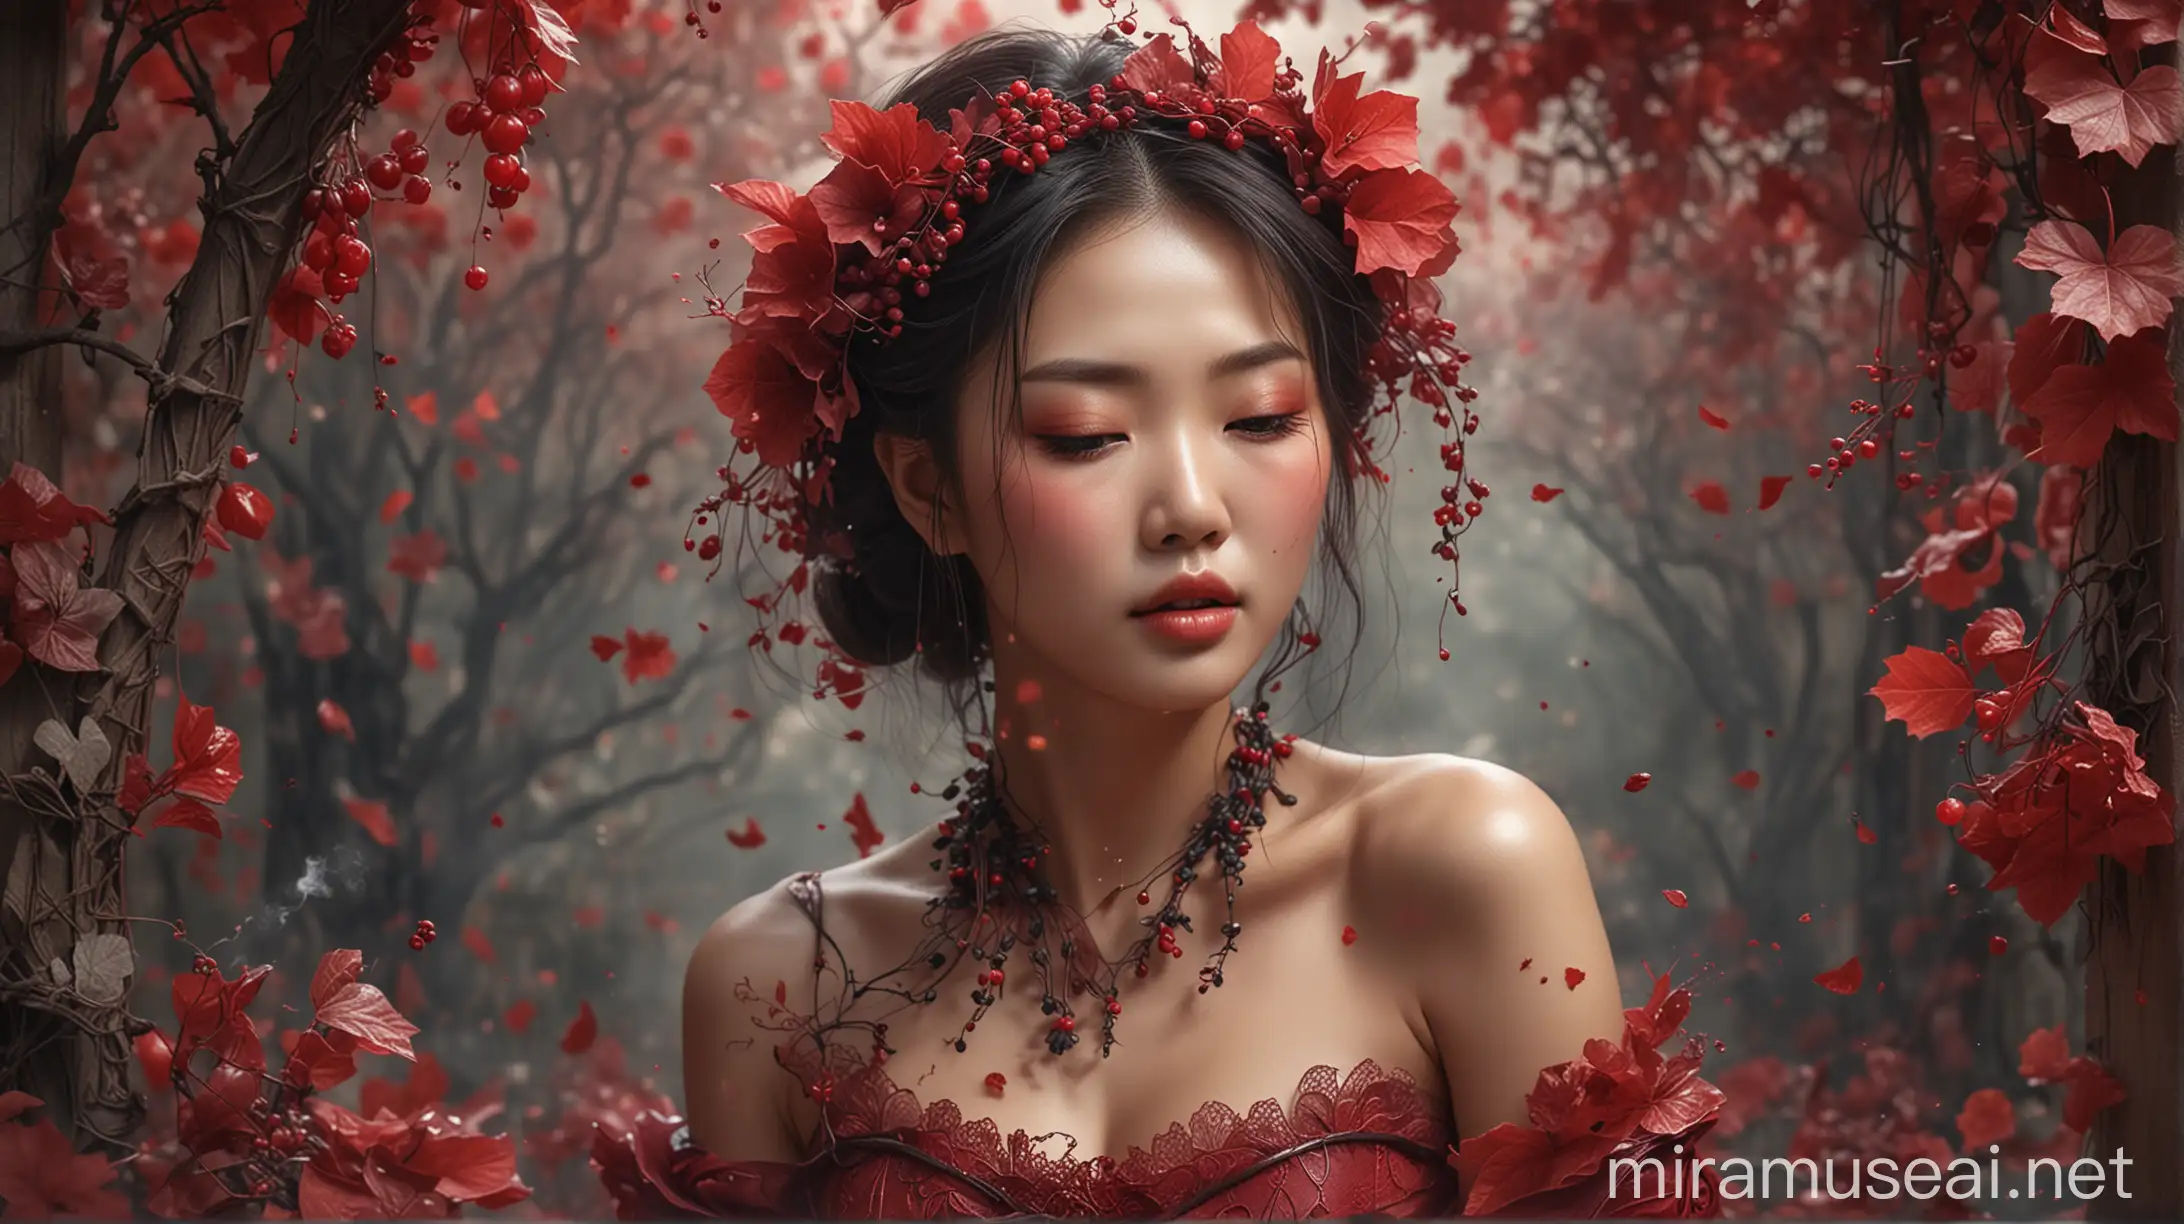 Fantasy Korea Woman Floral Creation in Vibrant Atmosphere